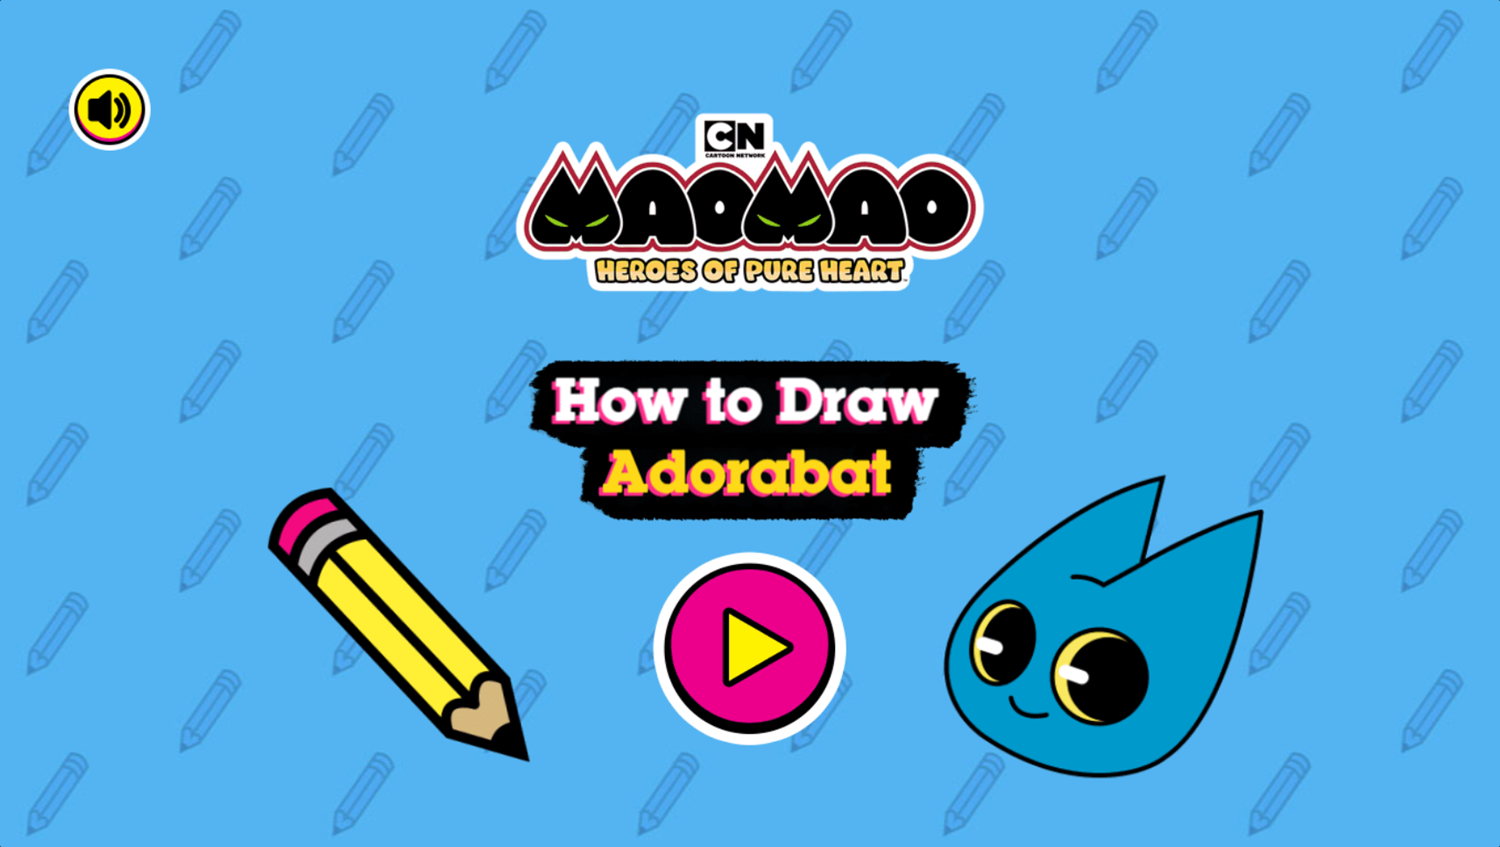 Mao Mao How to Draw Adorabat Game Welcome Screen Screenshot.